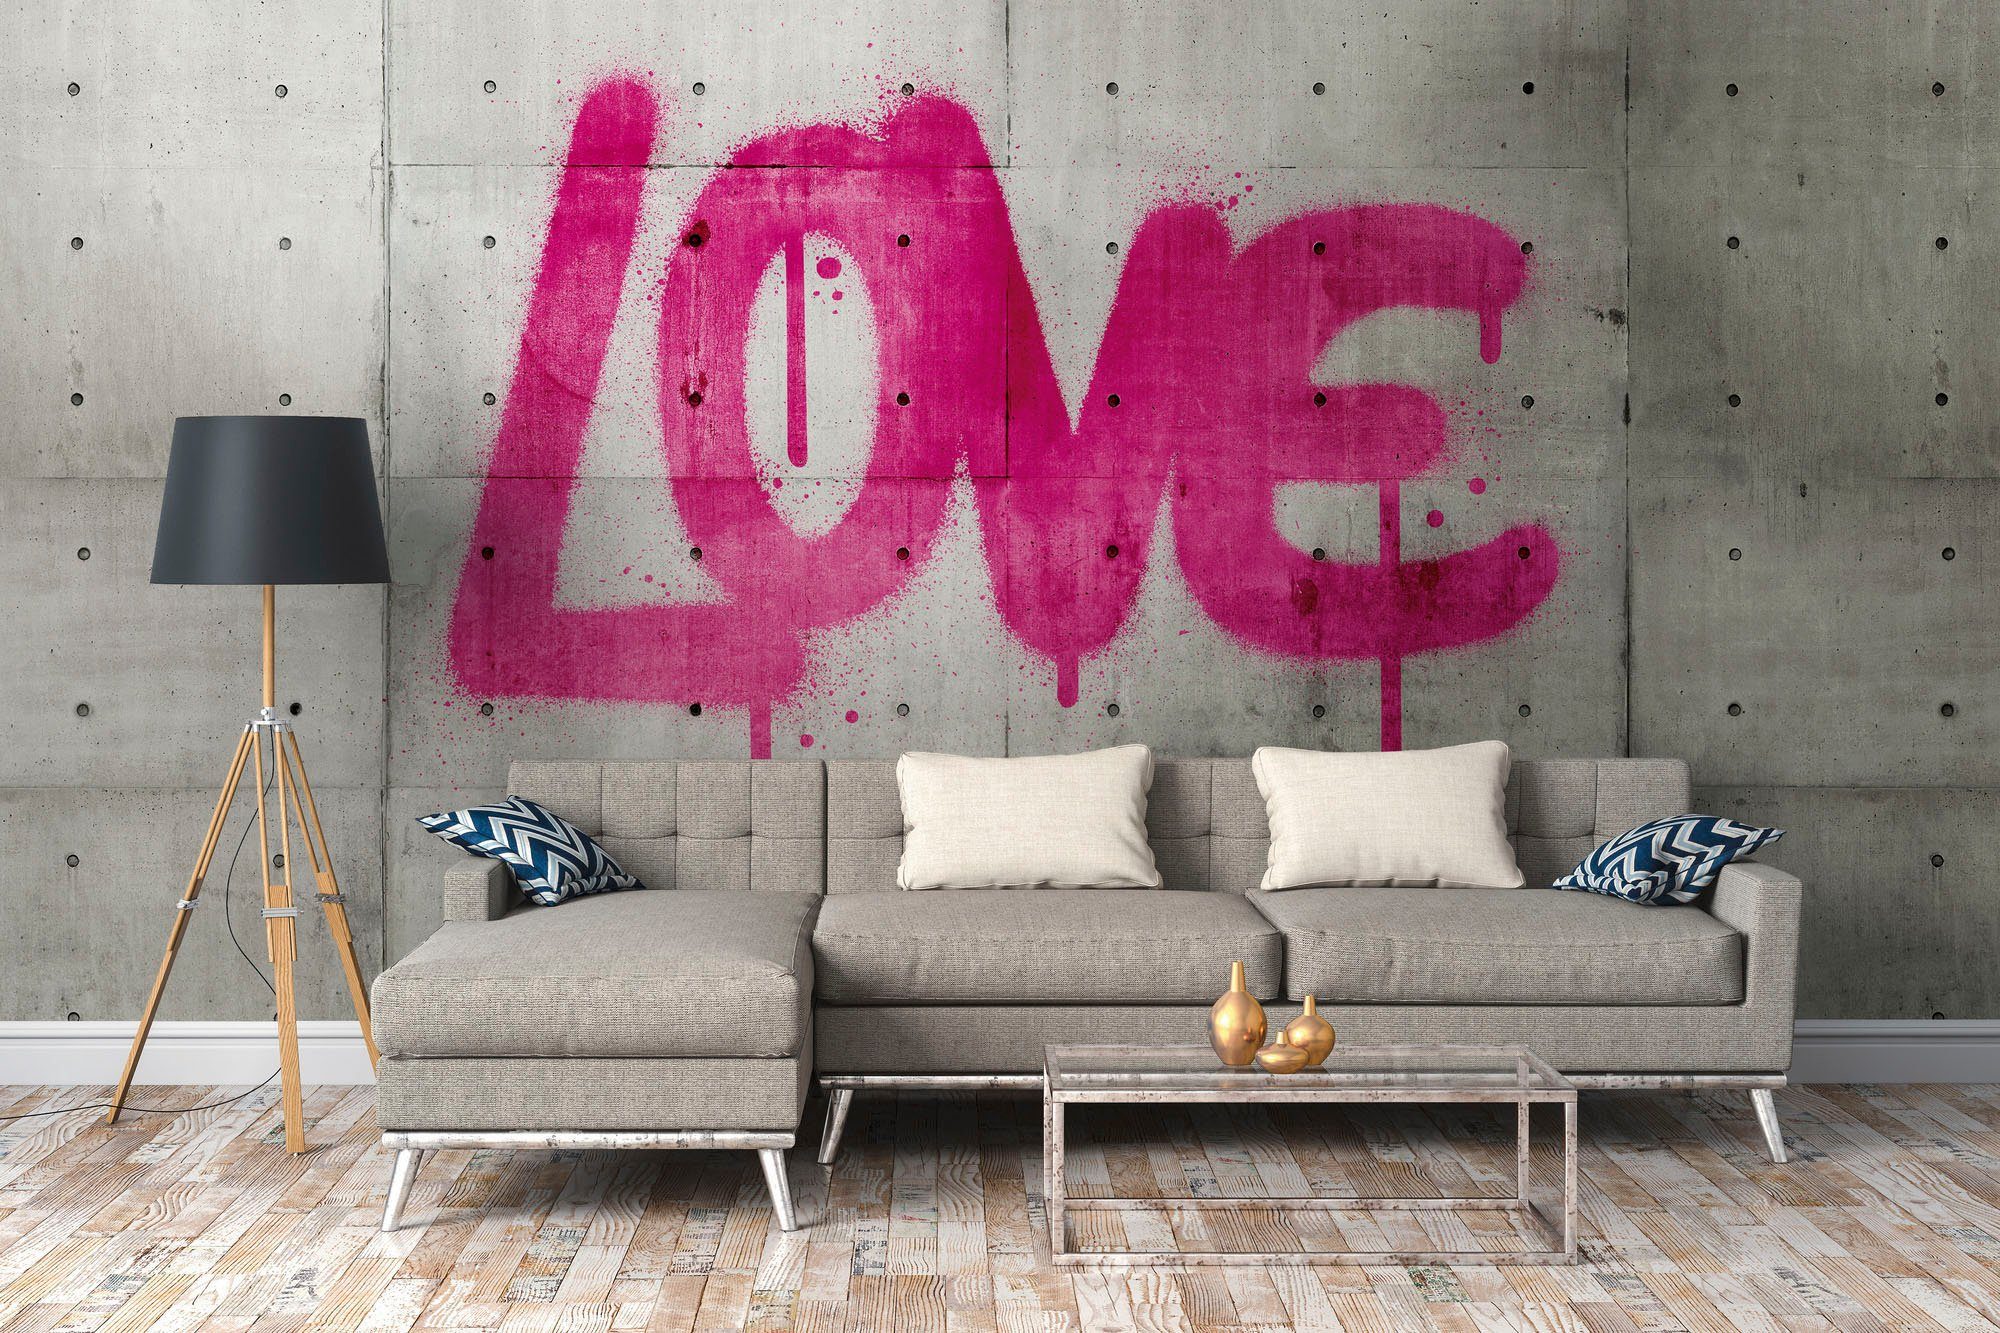 Tapete glatt, Fototapete Pink Schrift, Betonoptik Wall, Grau mit Modern Steinoptik, Fototapete walls The living urban,